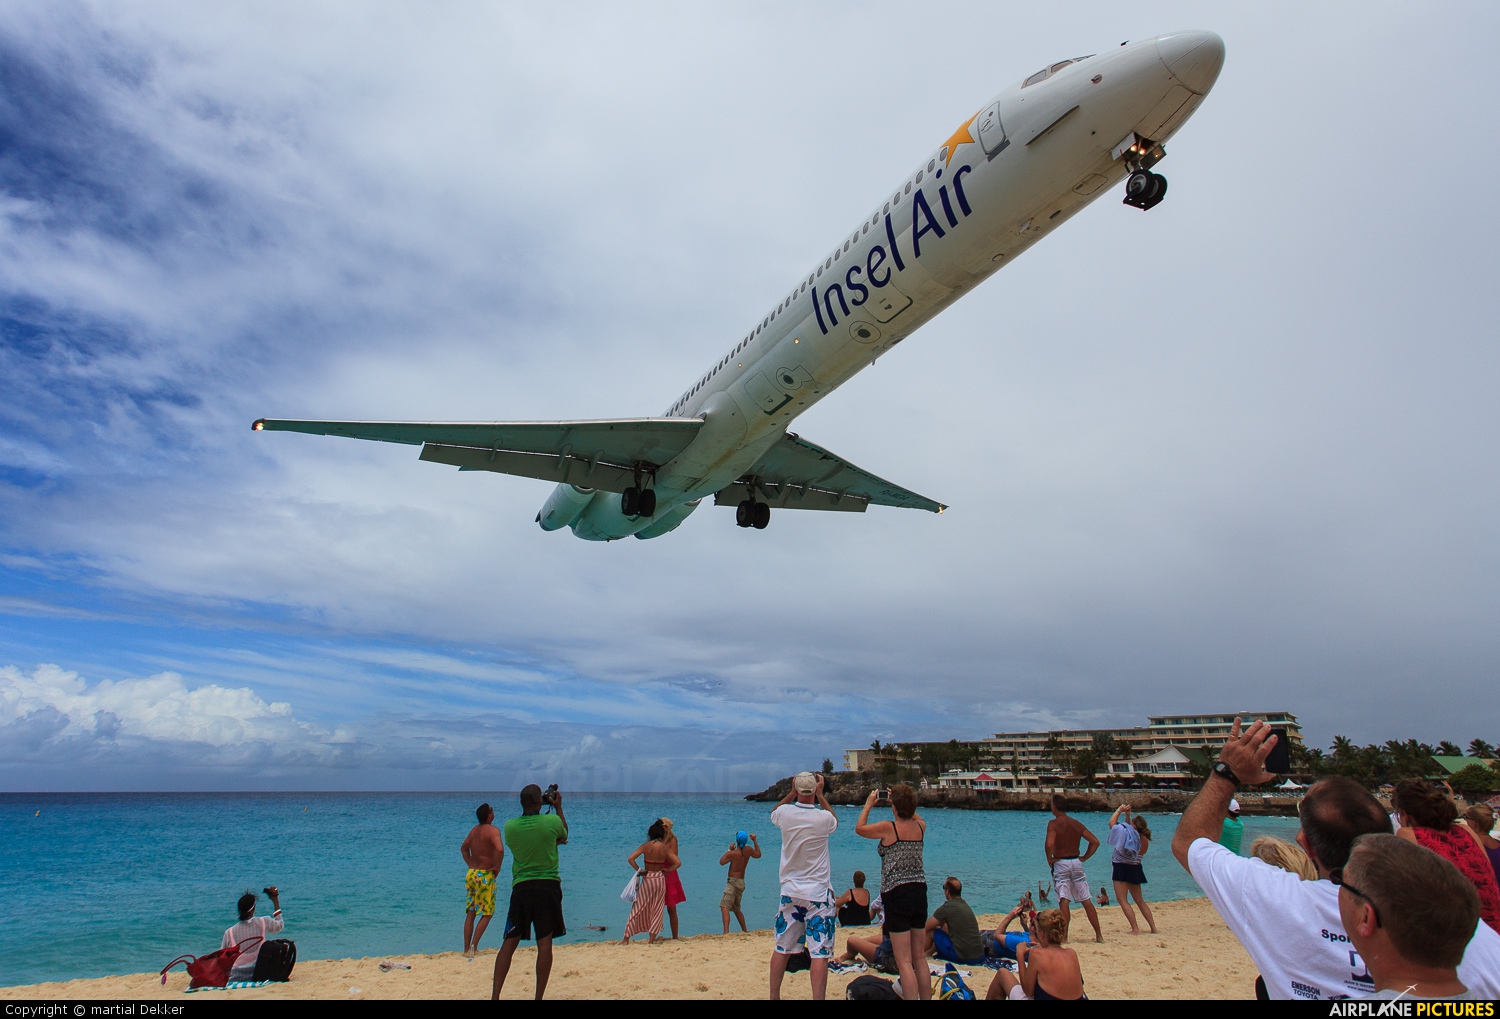 Insel Air PJ-MDE aircraft at Sint Maarten - Princess Juliana Intl